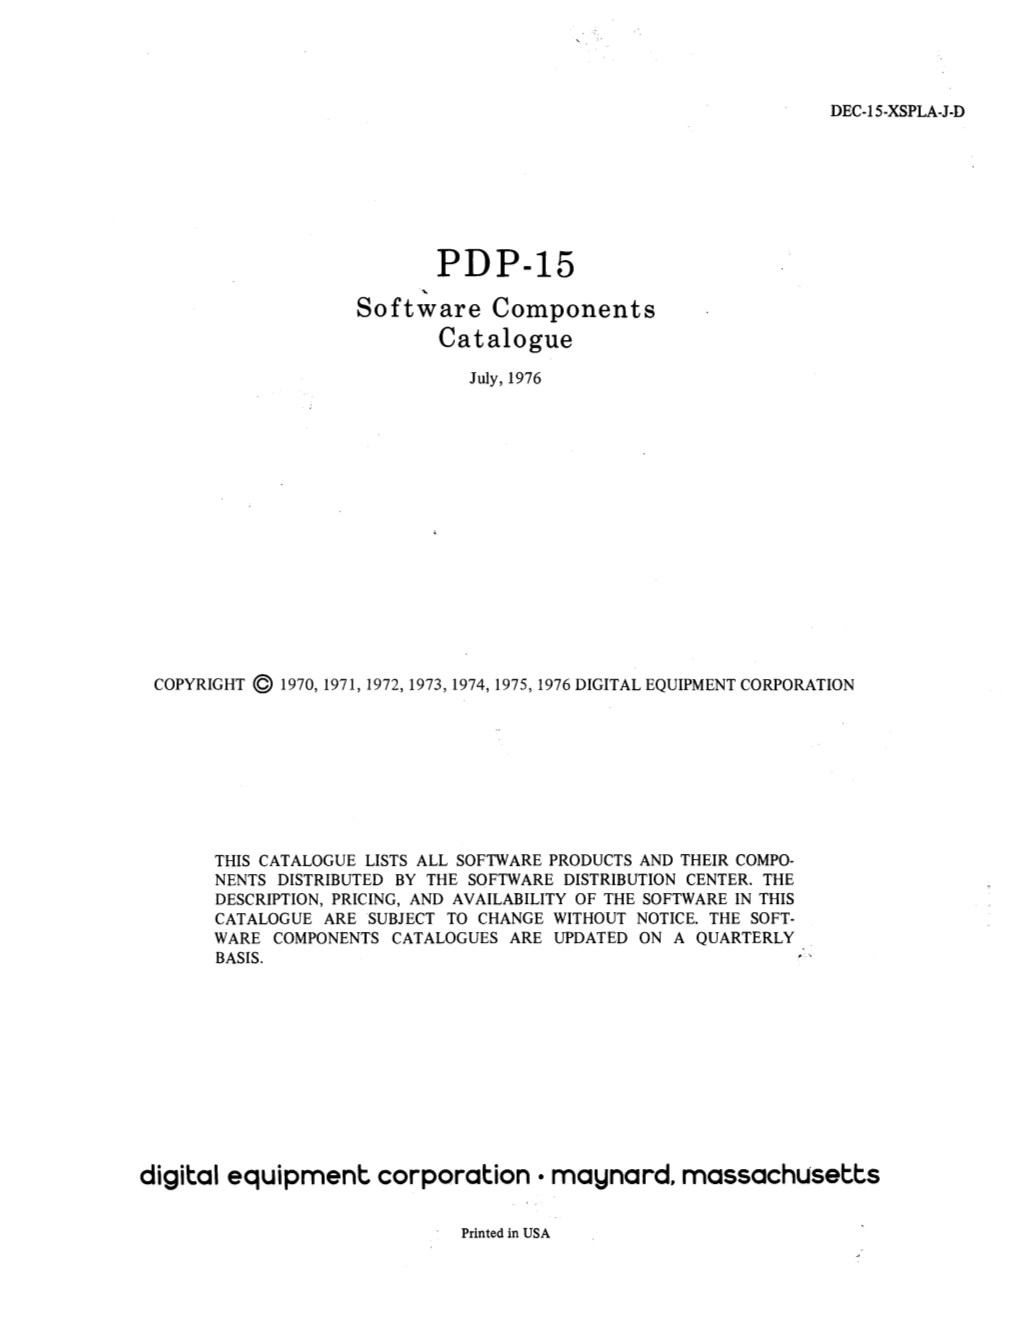 PDP-15 Software" Components Catalogue